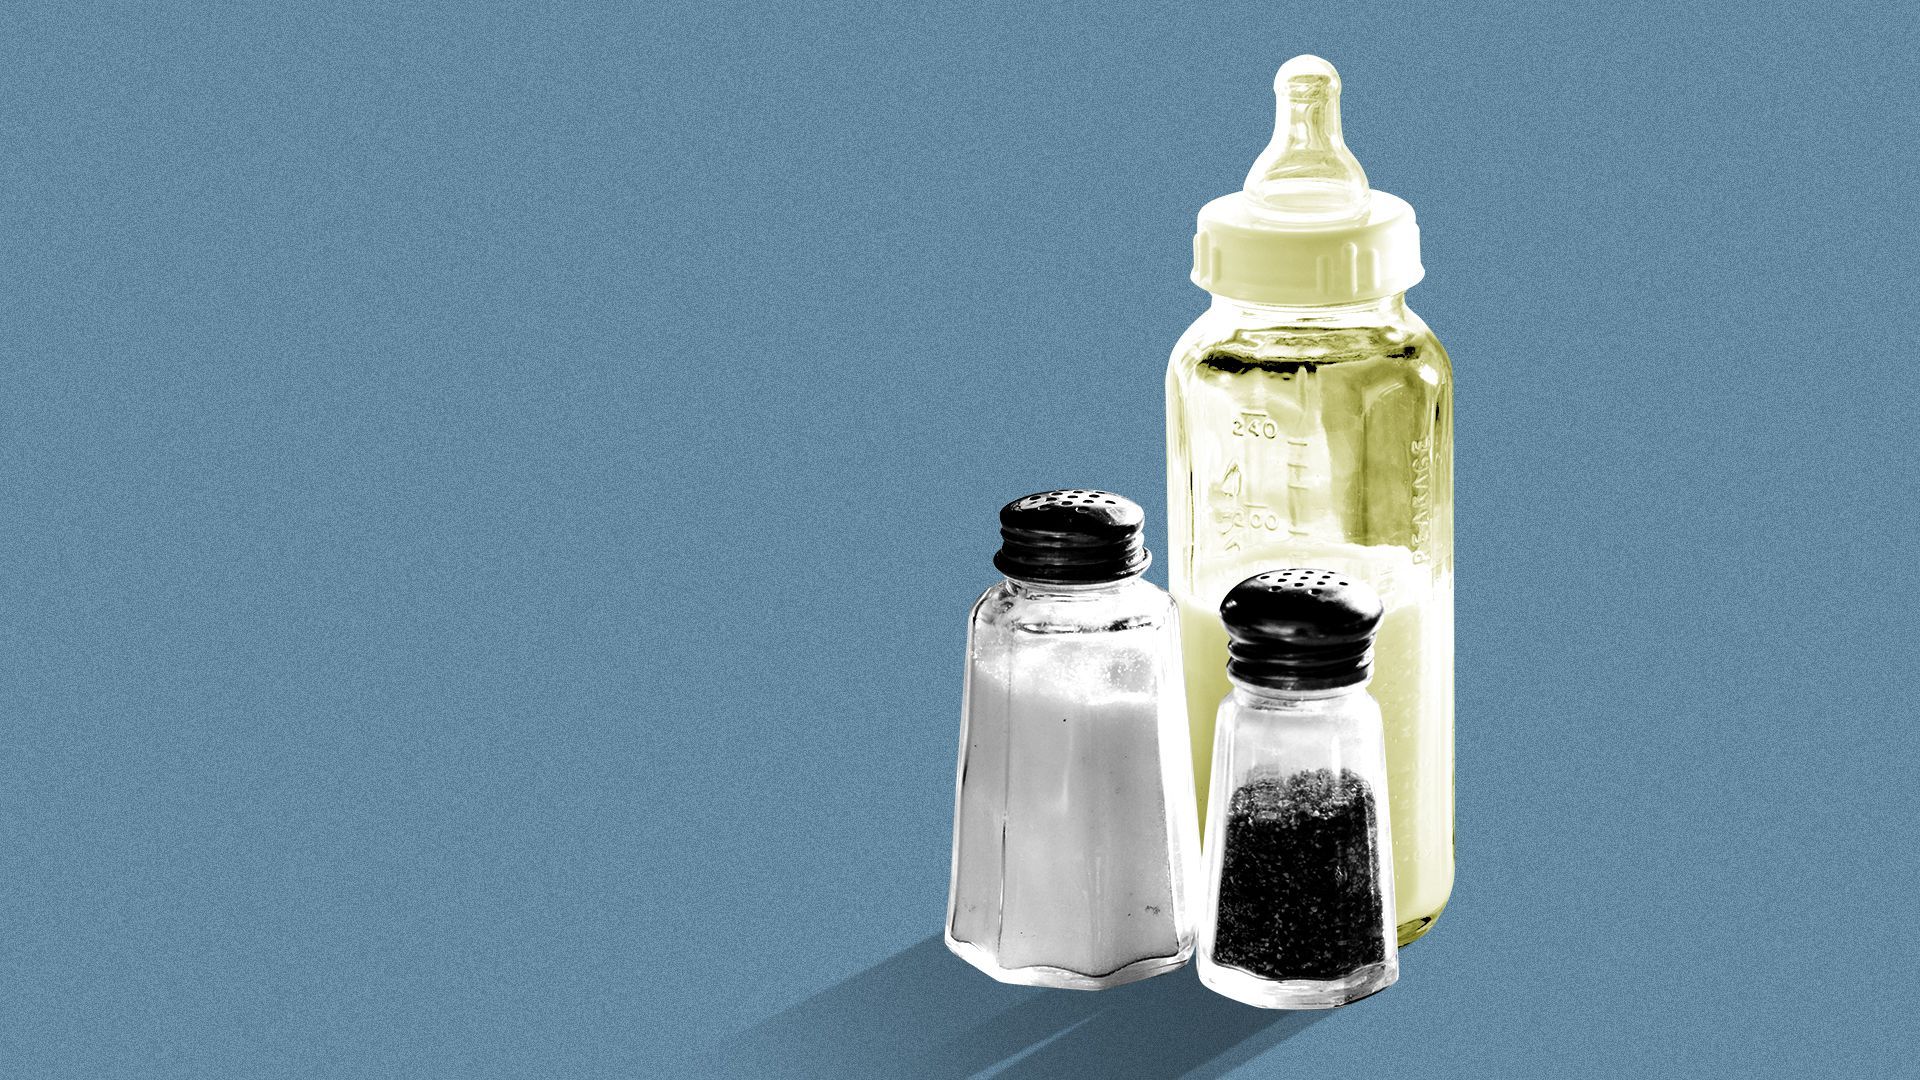 Illustration of a baby bottle behind a salt and pepper shaker.